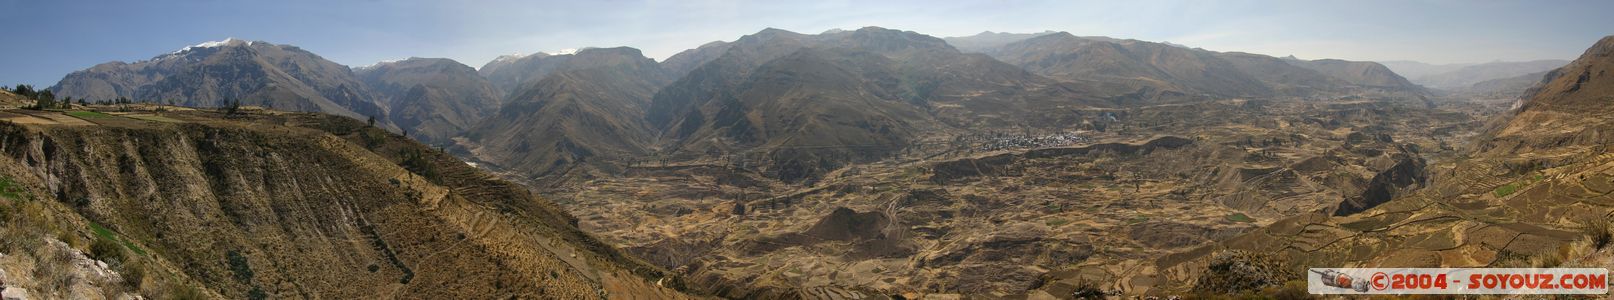 Canyon del Colca - panorama
Mots-clés: peru panorama Montagne